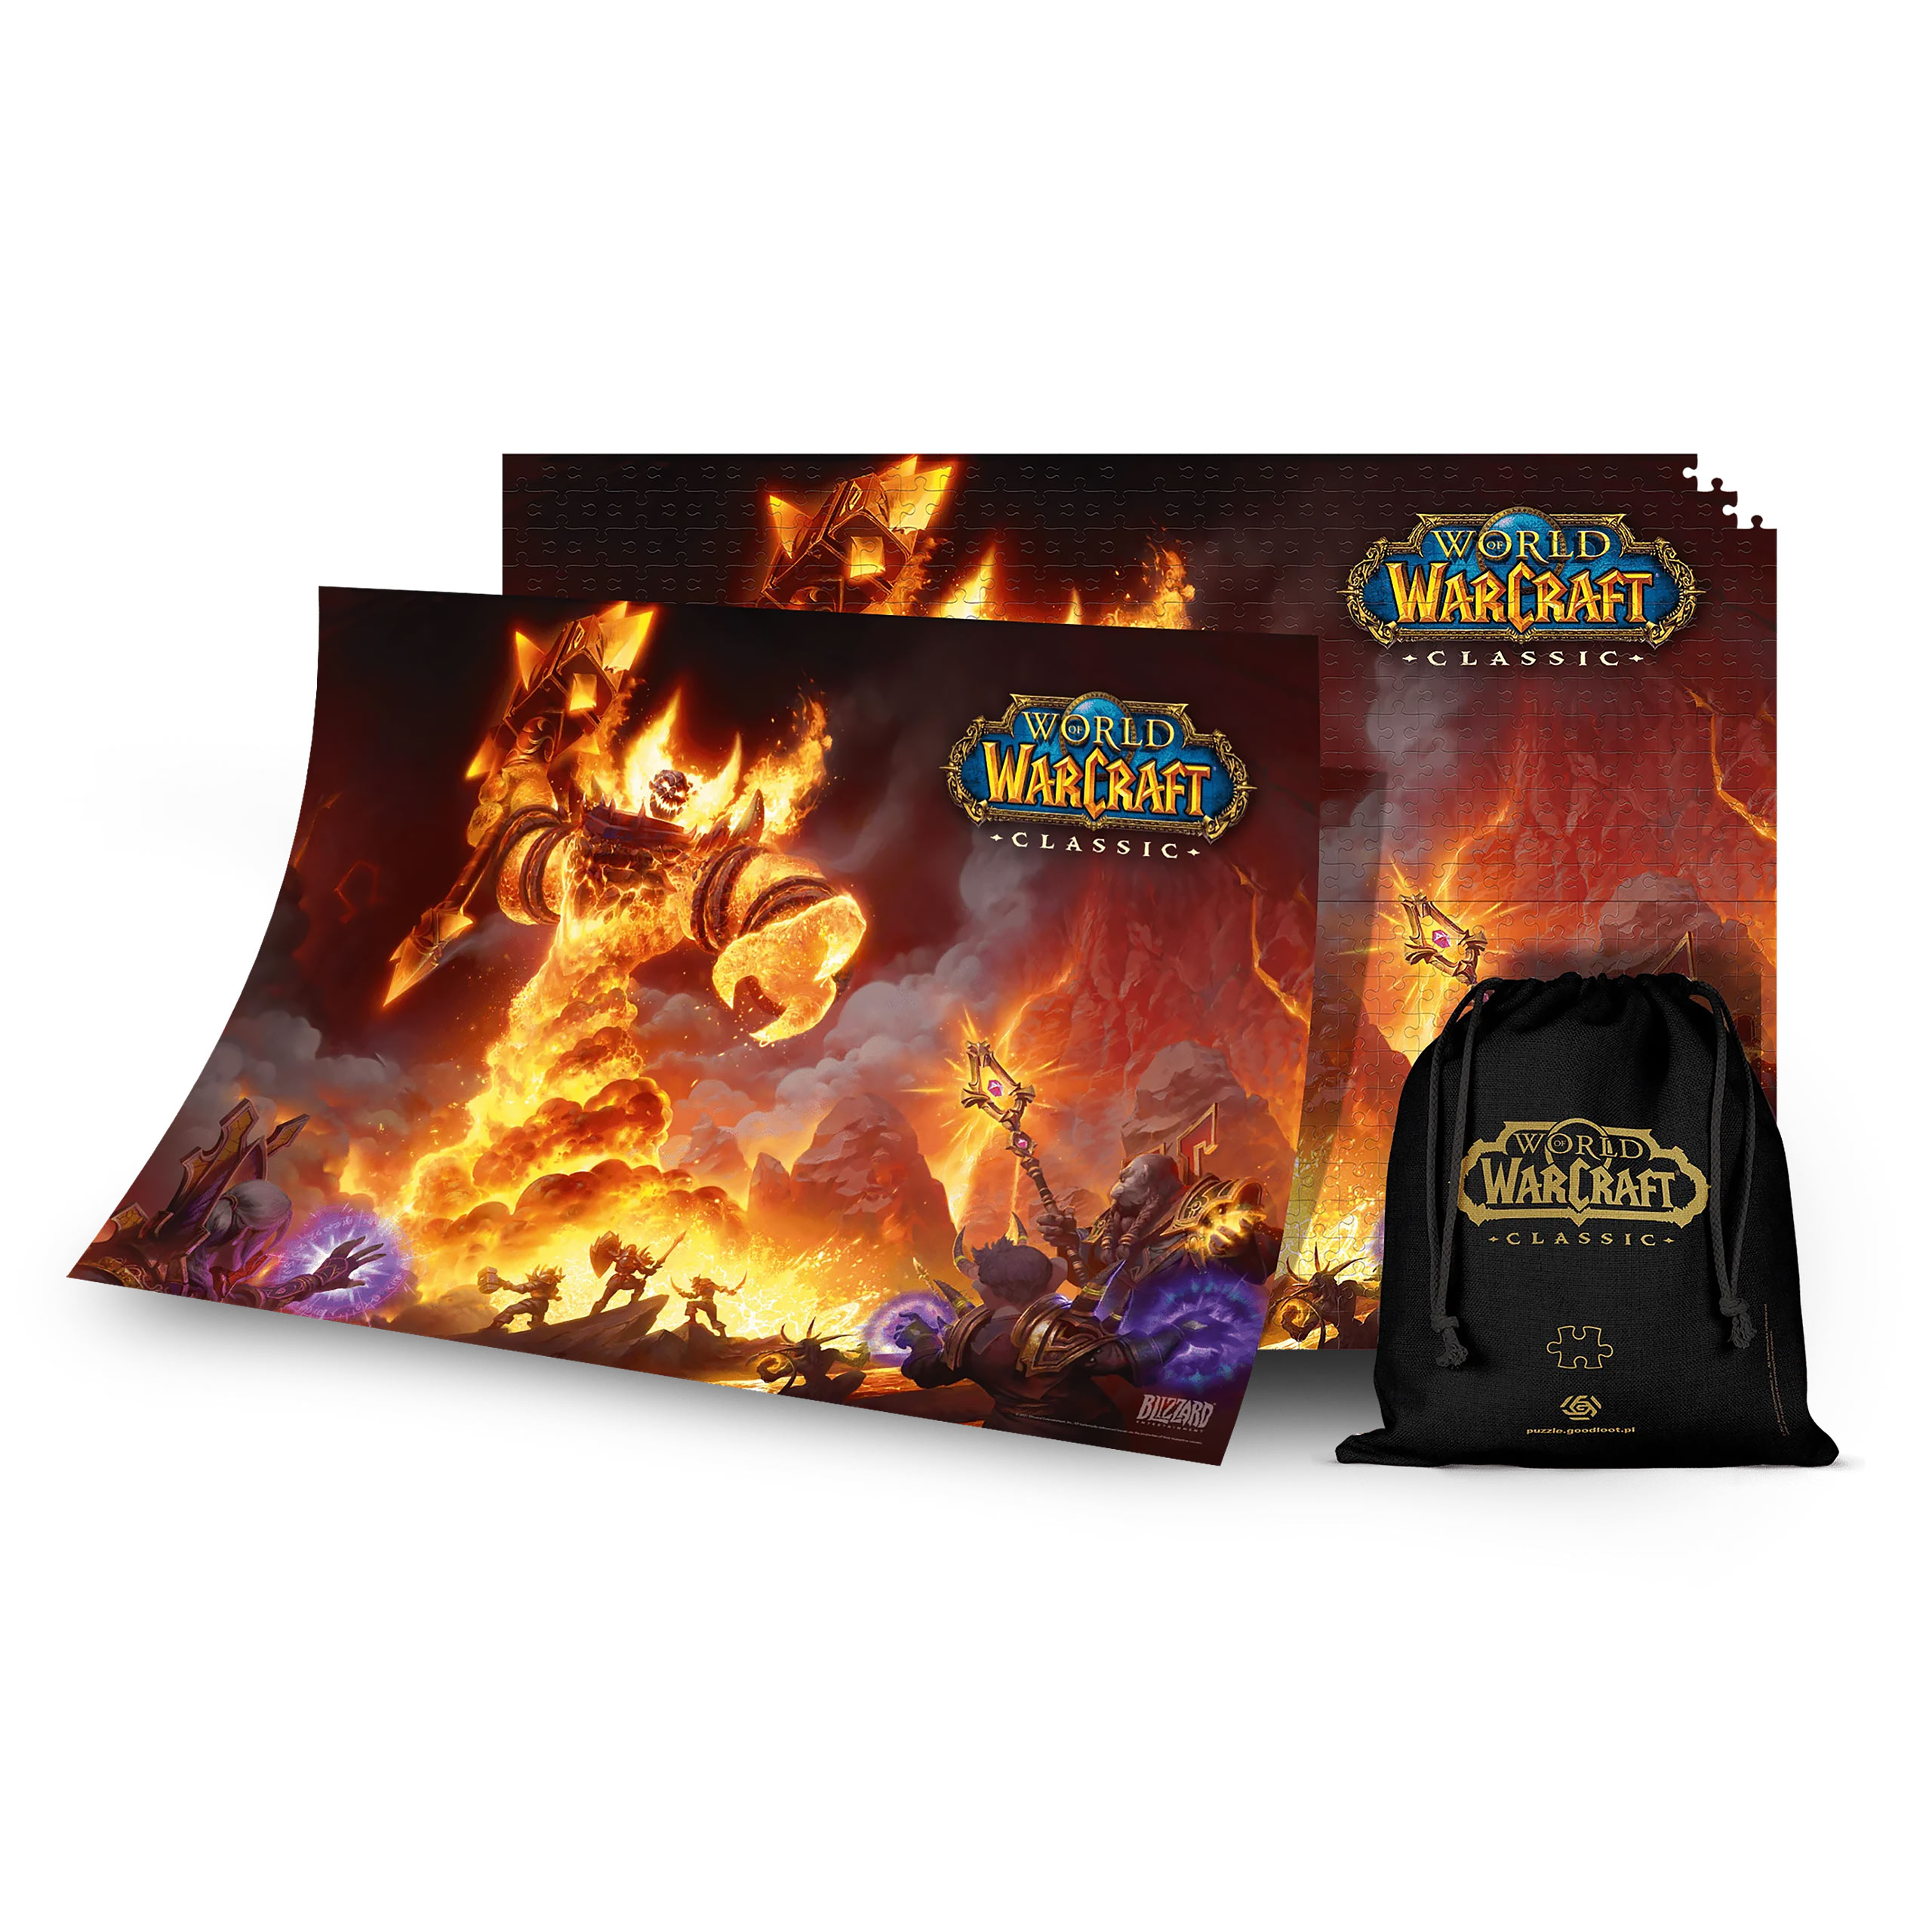 World of Warcraft - Ragnaros Puzzle with Logo Cloth Bag